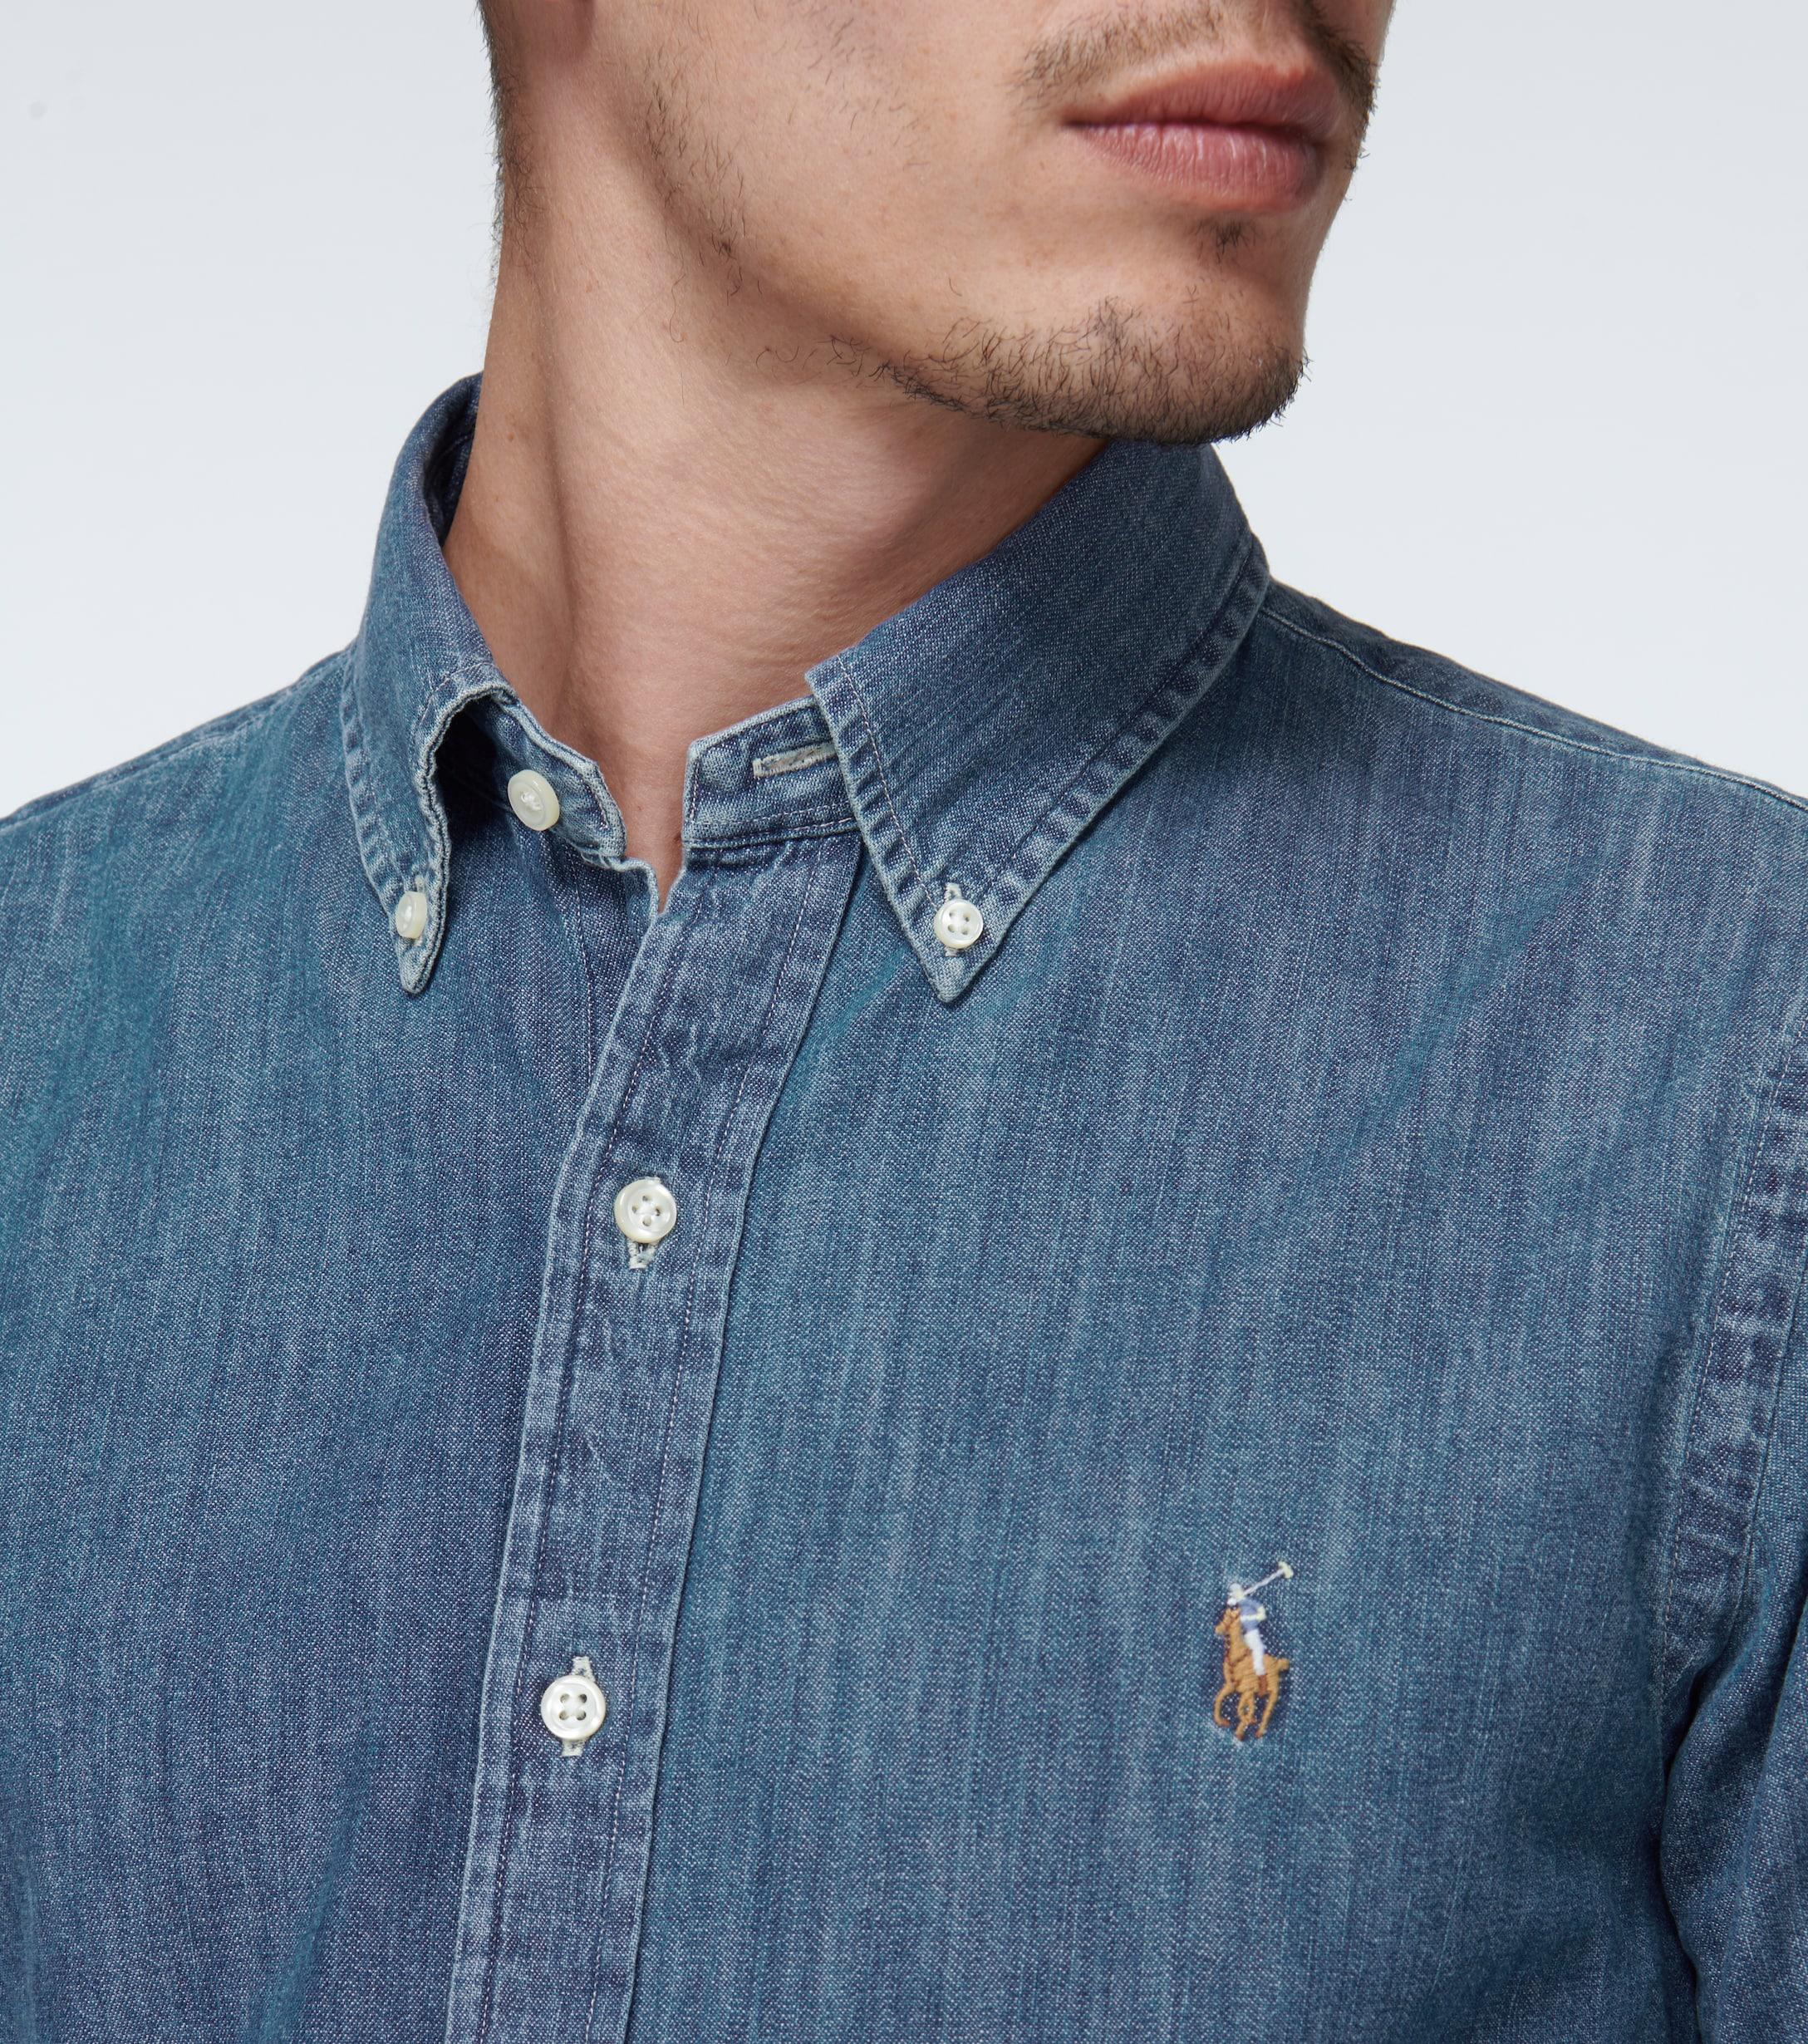 Polo Ralph Lauren Slim-fit Denim Shirt in Blue for Men - Lyst